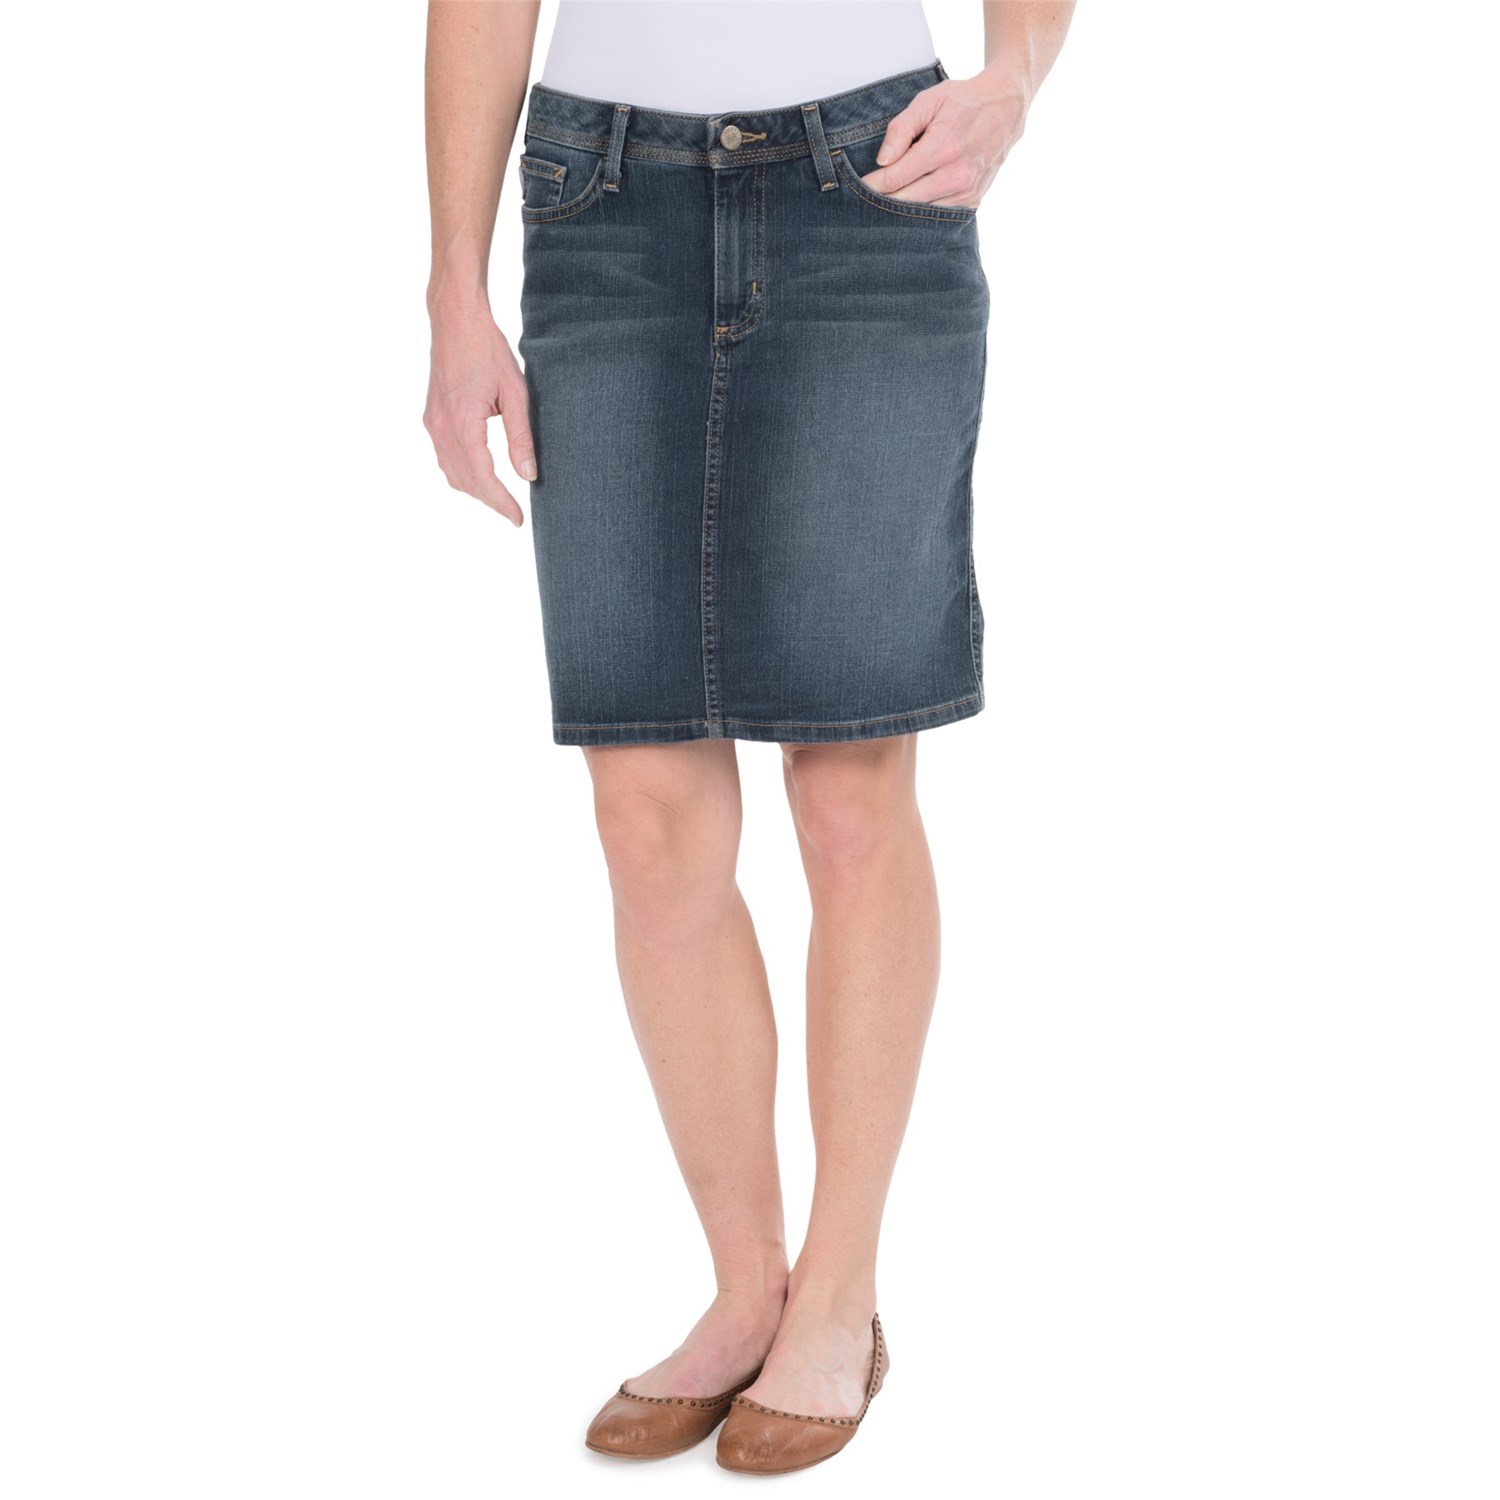 Carhartt Bellport Denim Skirt (For Women) 8343D